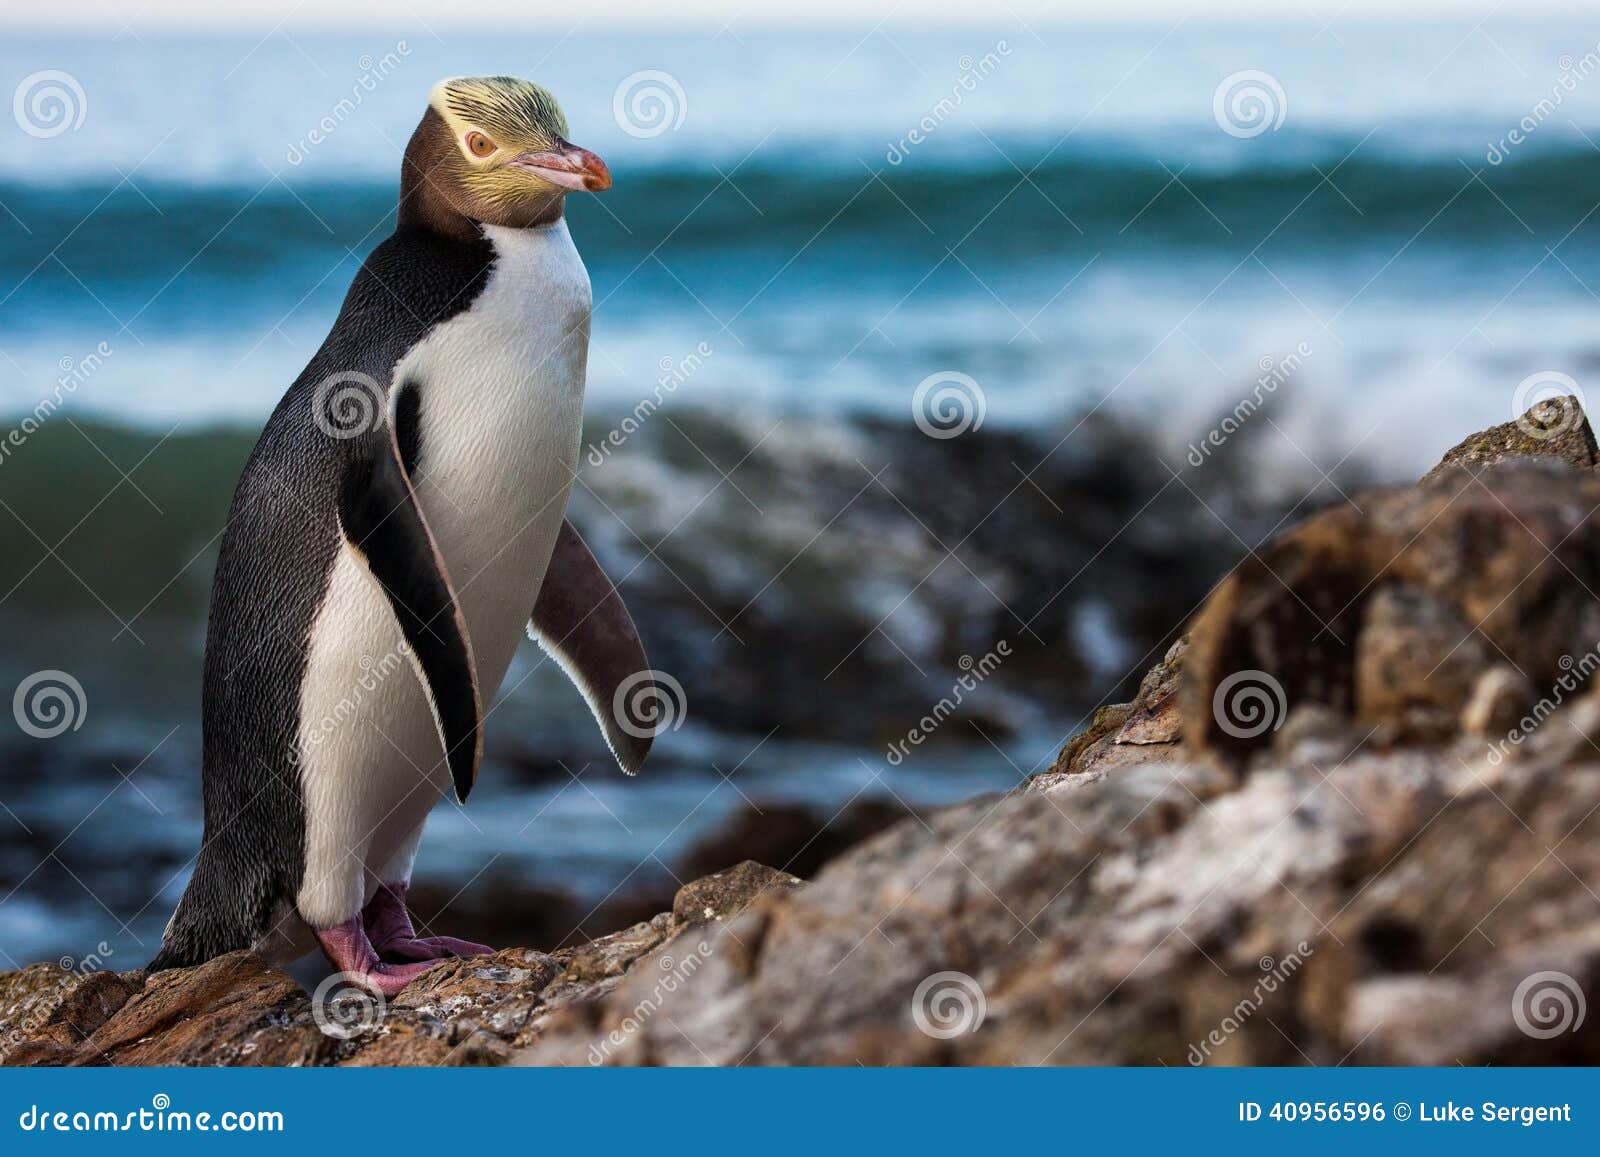 yellow-eyed penguin